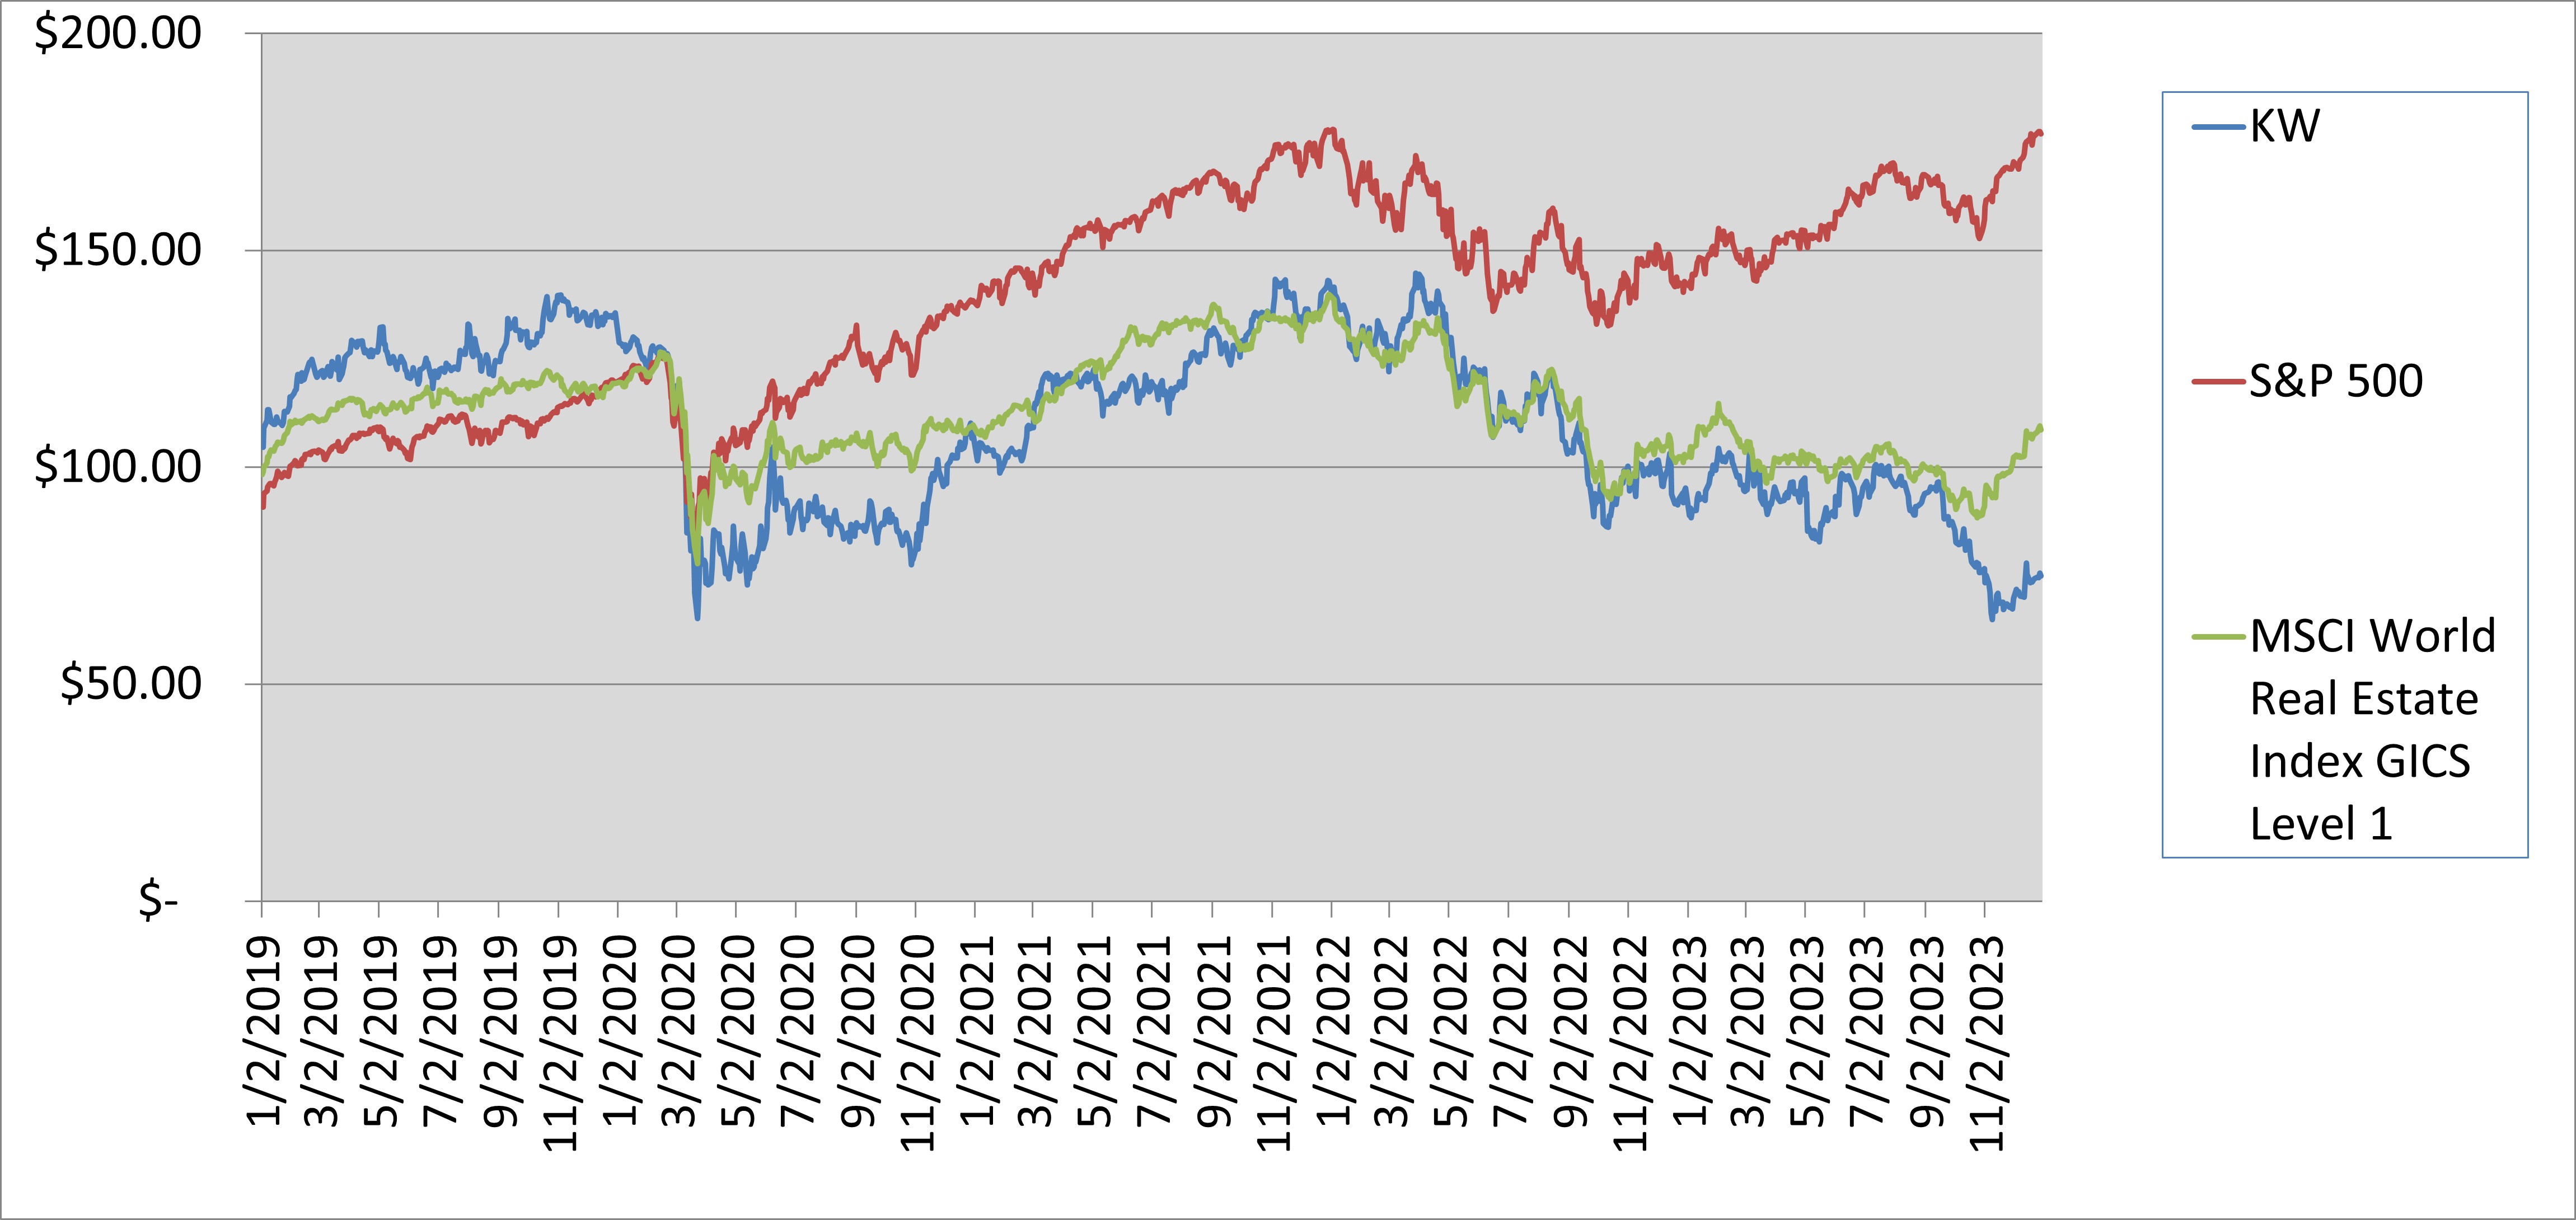 KW Stock Chart.jpg